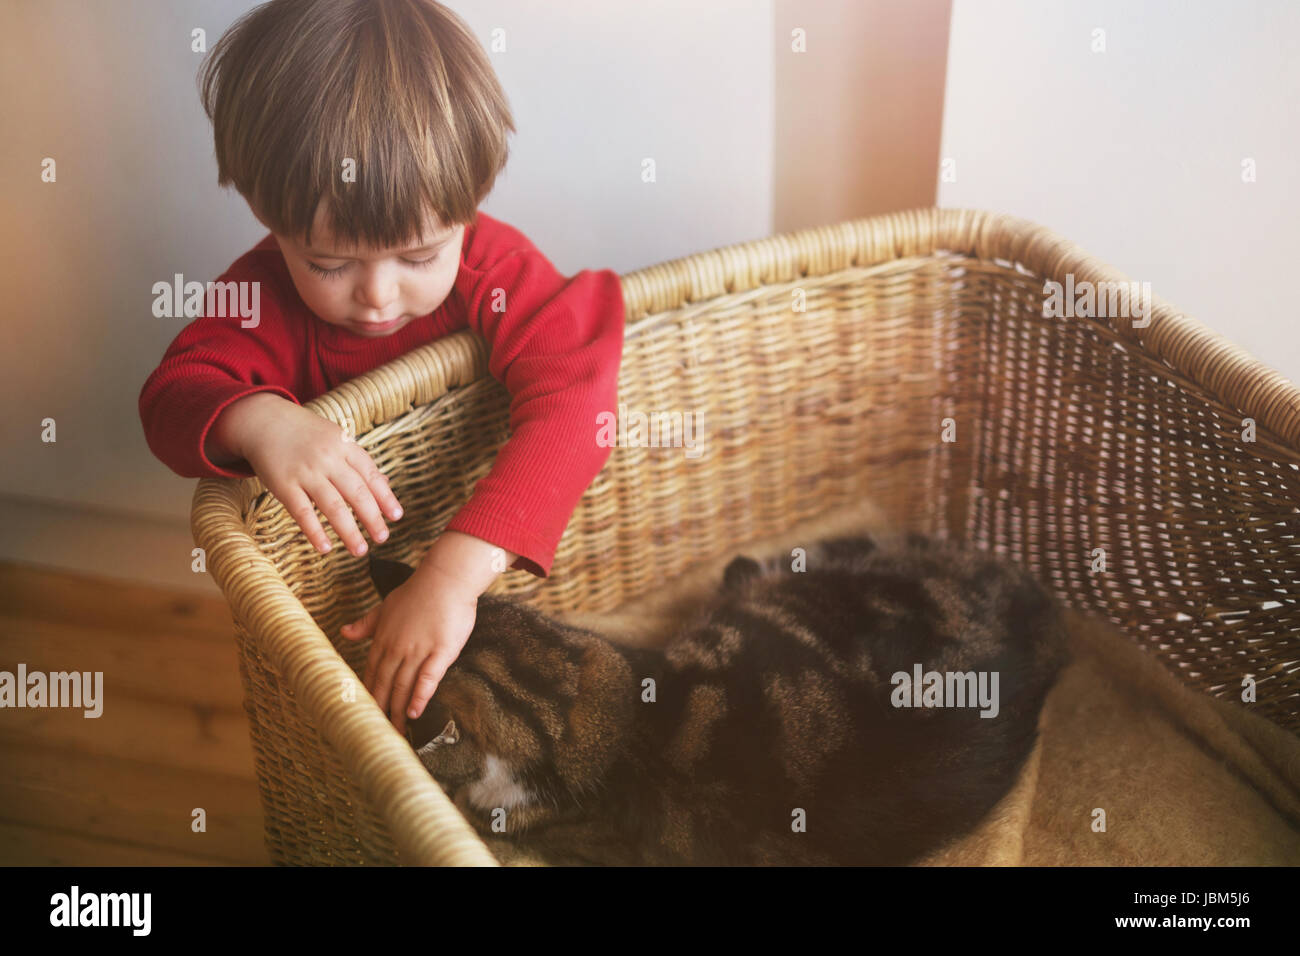 Boy petting cat in basket Banque D'Images